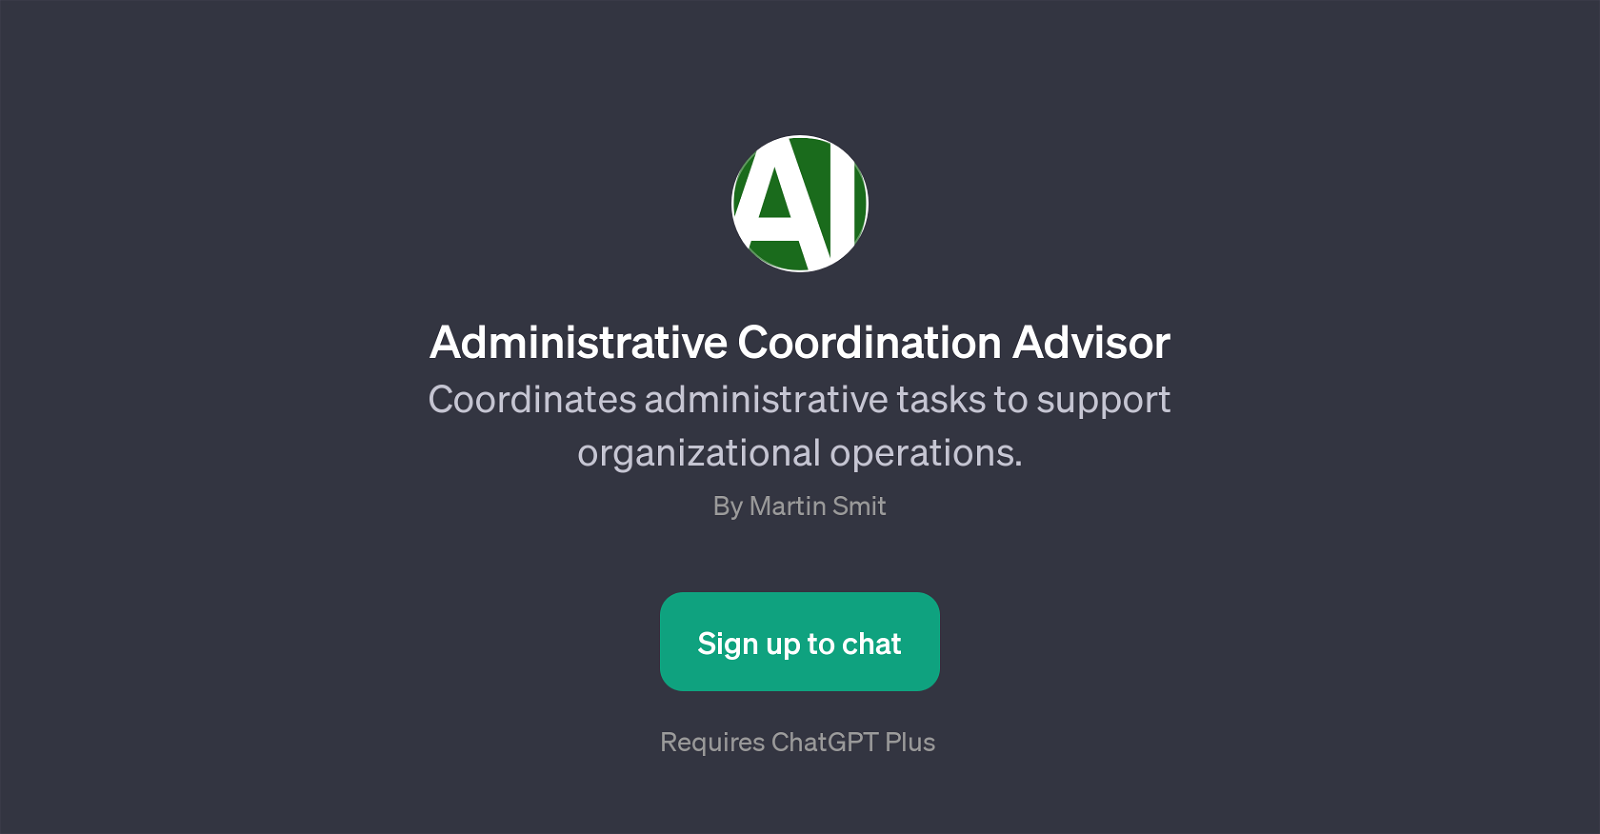 Administrative Coordination Advisor website